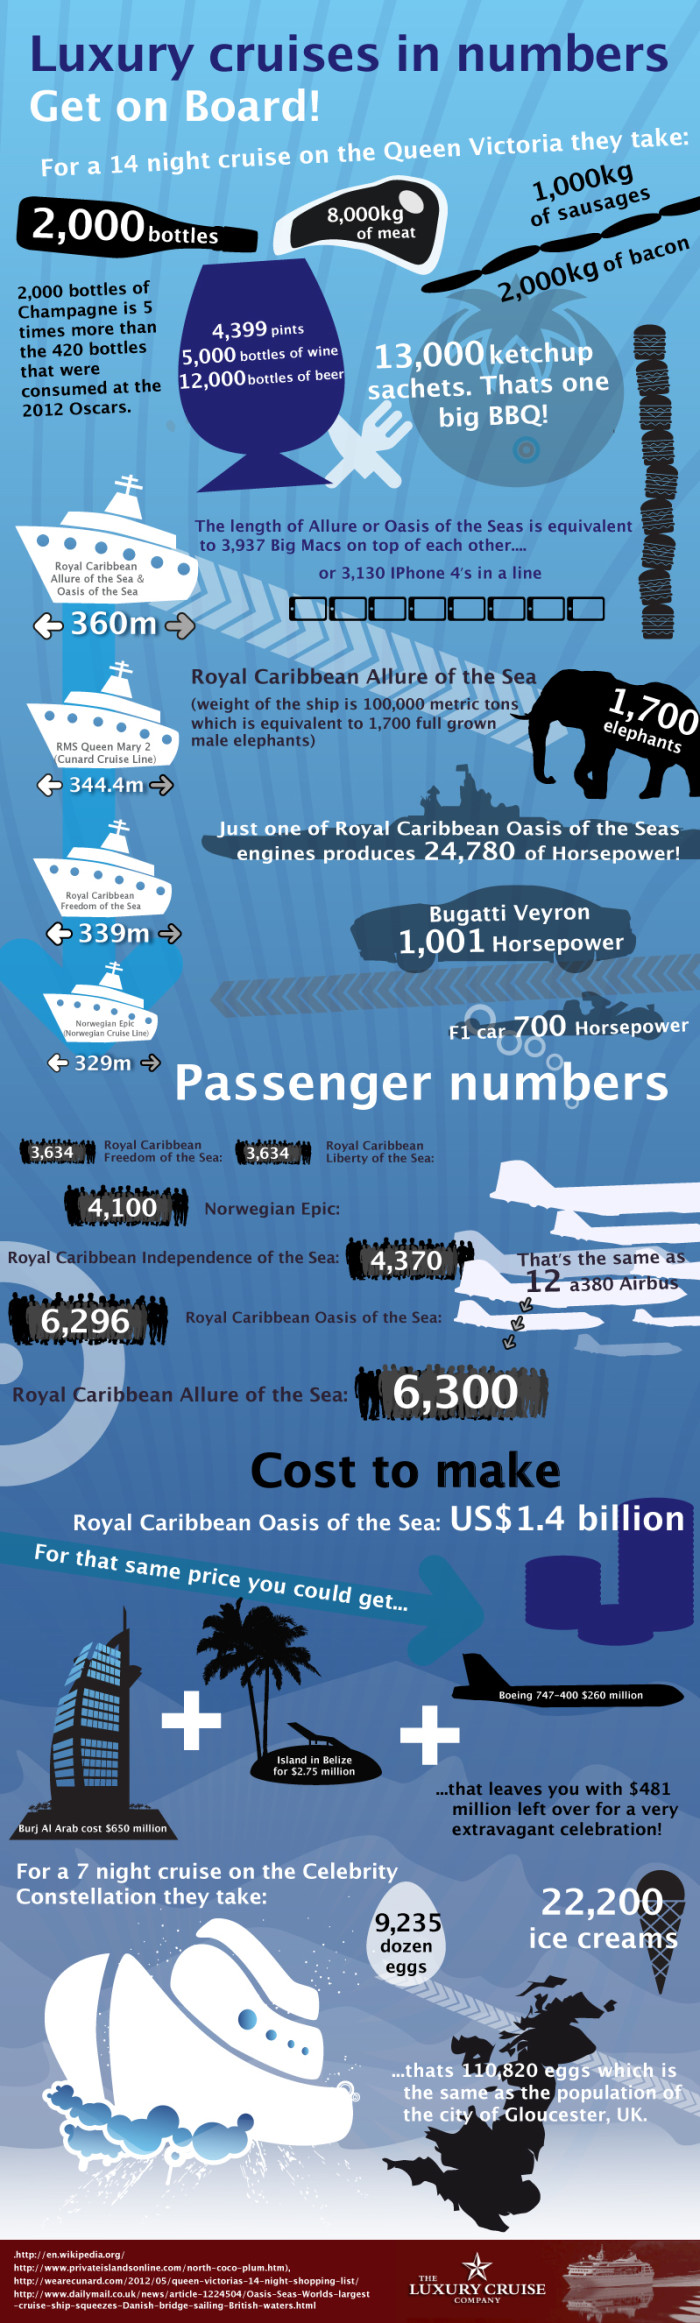 Get On Board! Luxury Cruises In Numbers